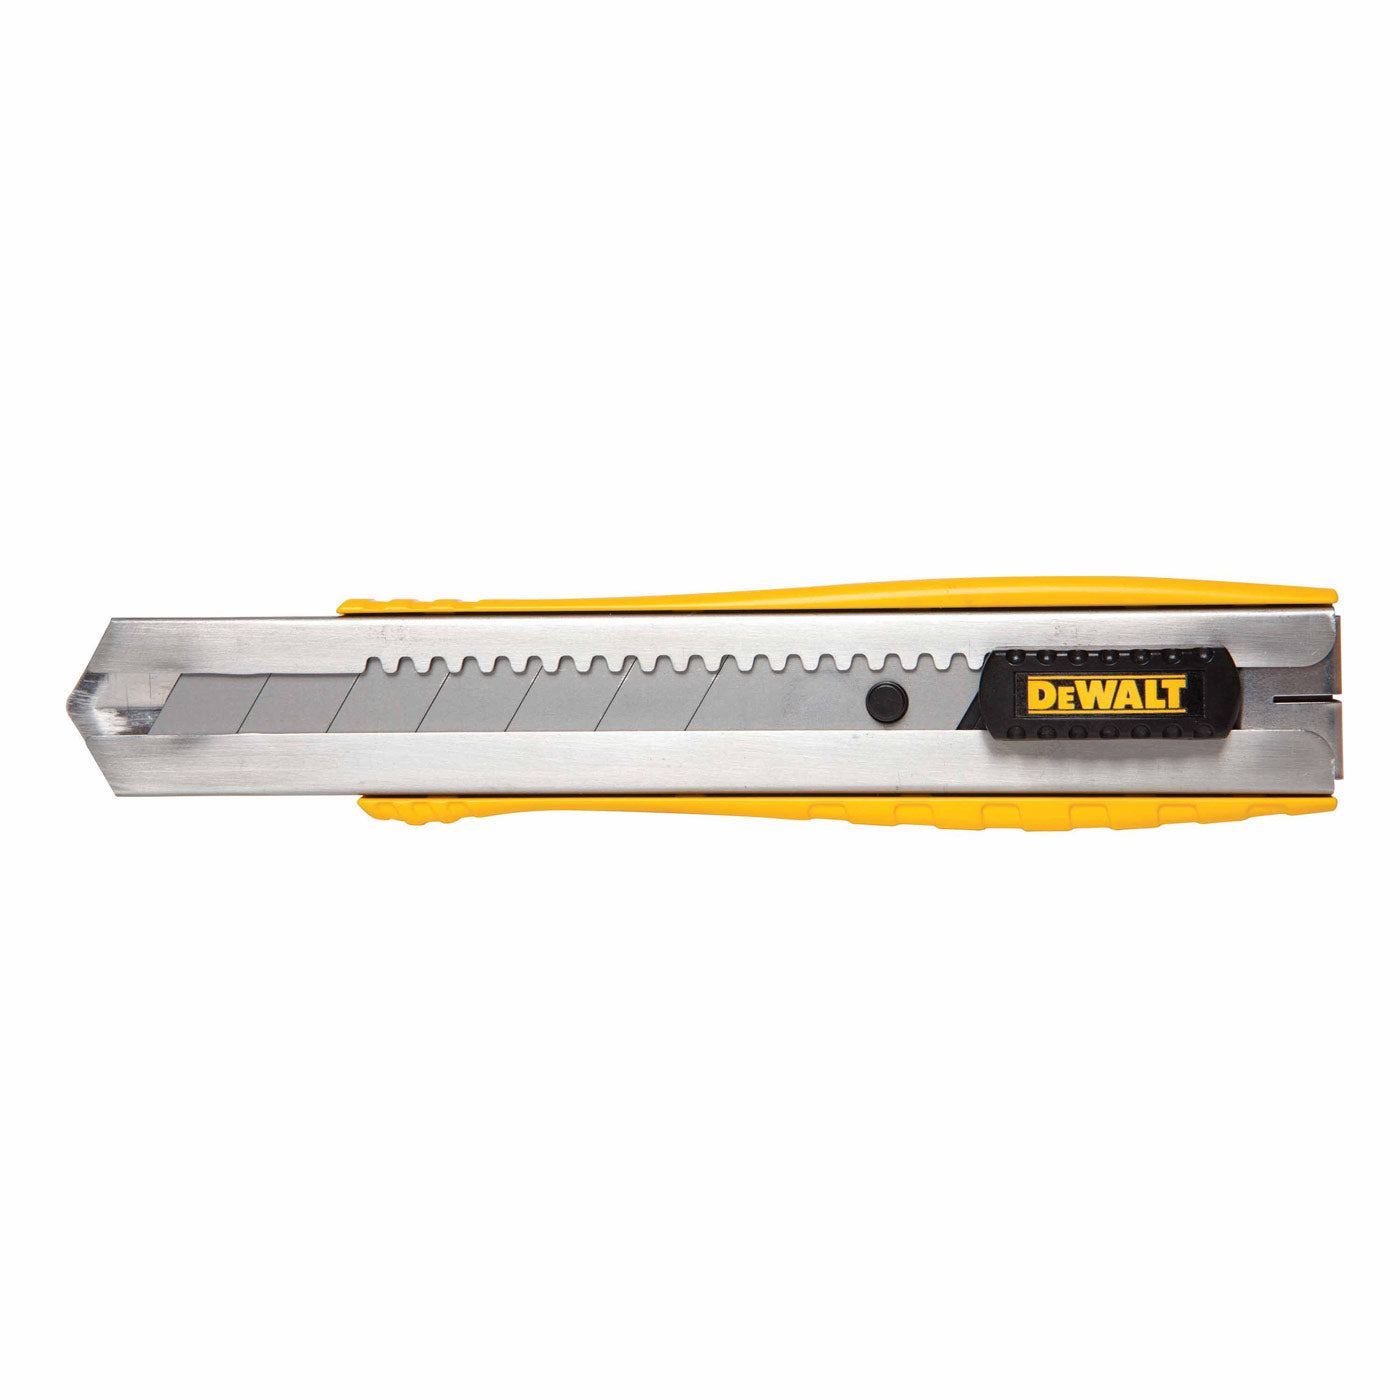 DeWalt DWHT10045 25MM Single Blade Snap-Off Knife